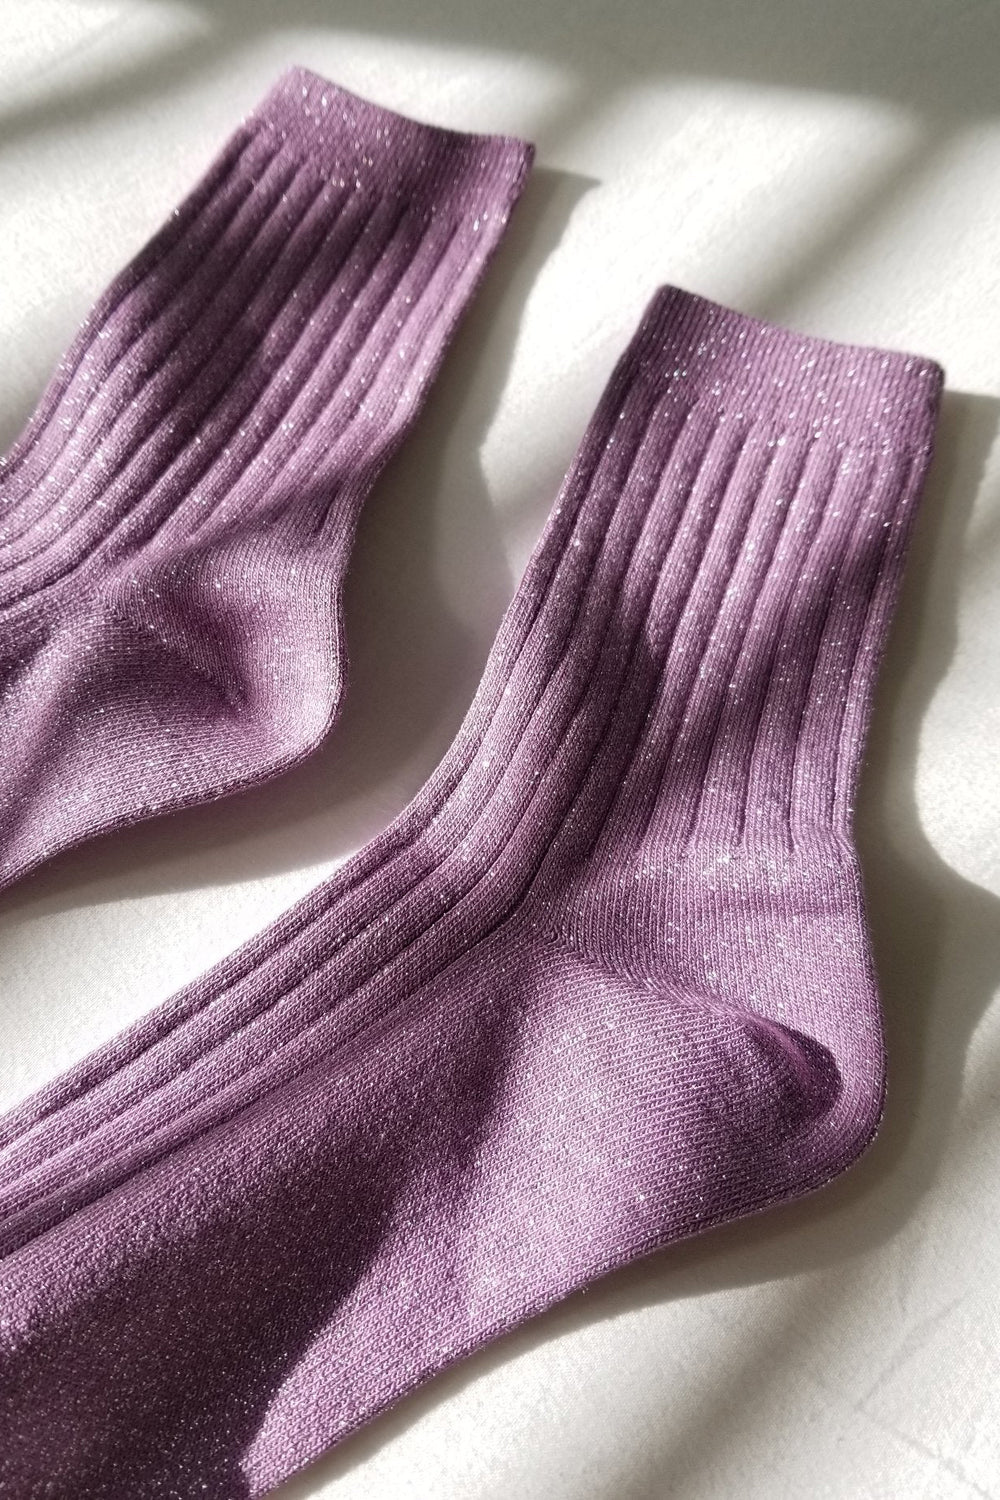 Her socks - Lilac Glitter